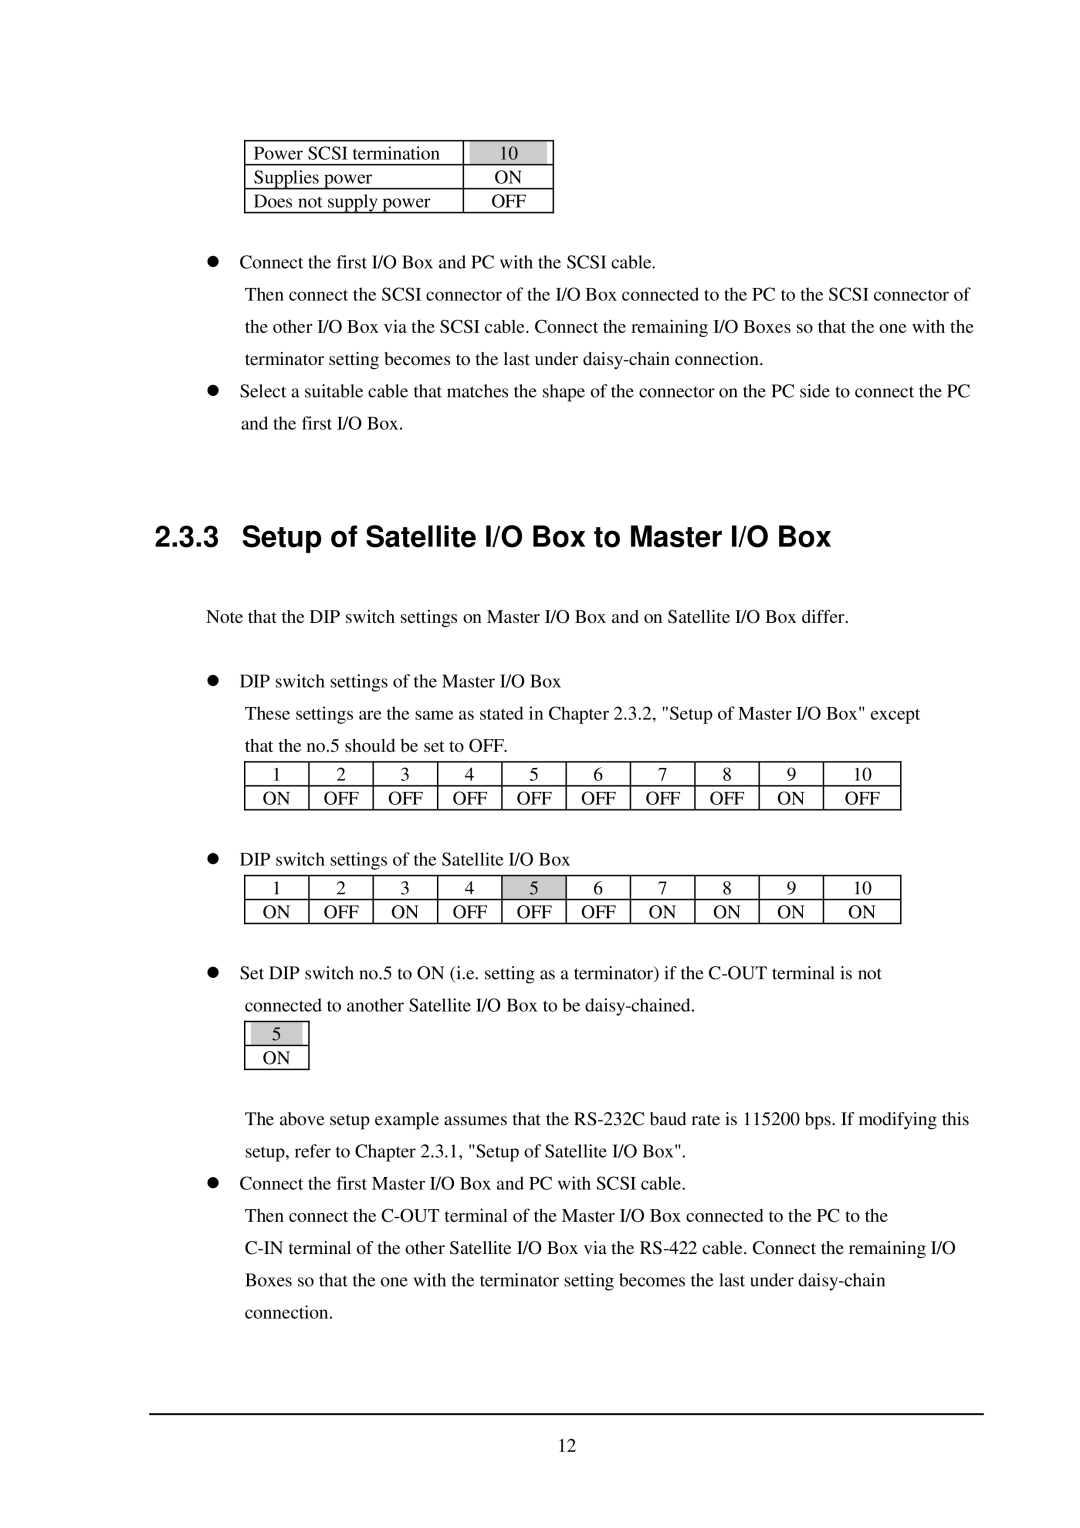 Casio IT-2000 installation manual Setup of Satellite I/O Box to Master I/O Box 